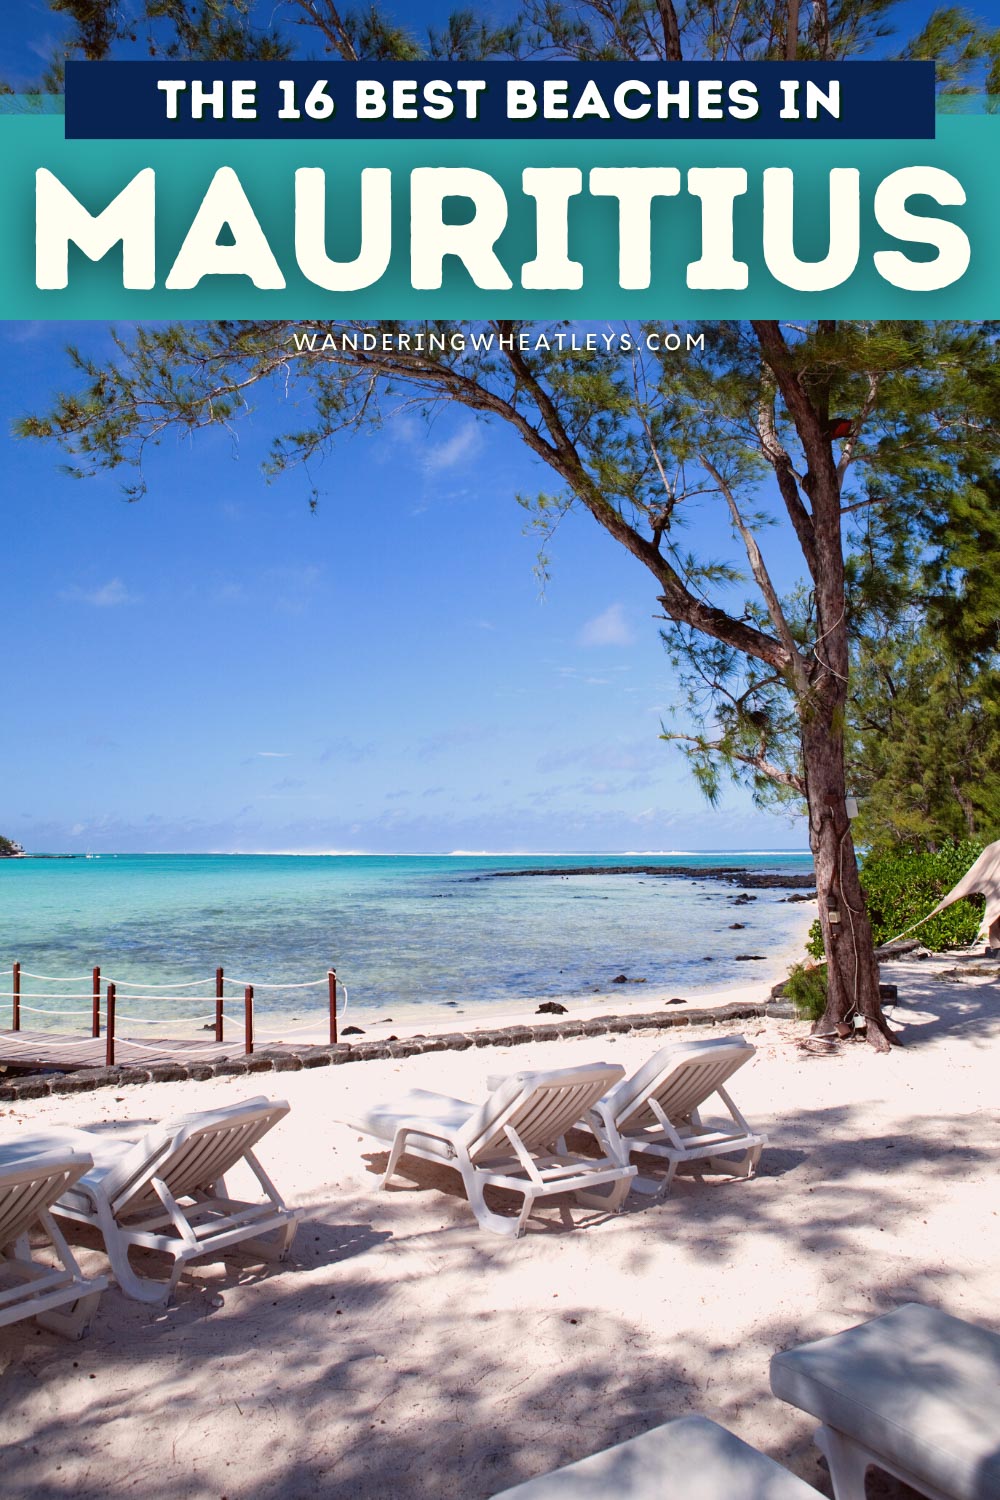 The Best Beaches in Mauritius